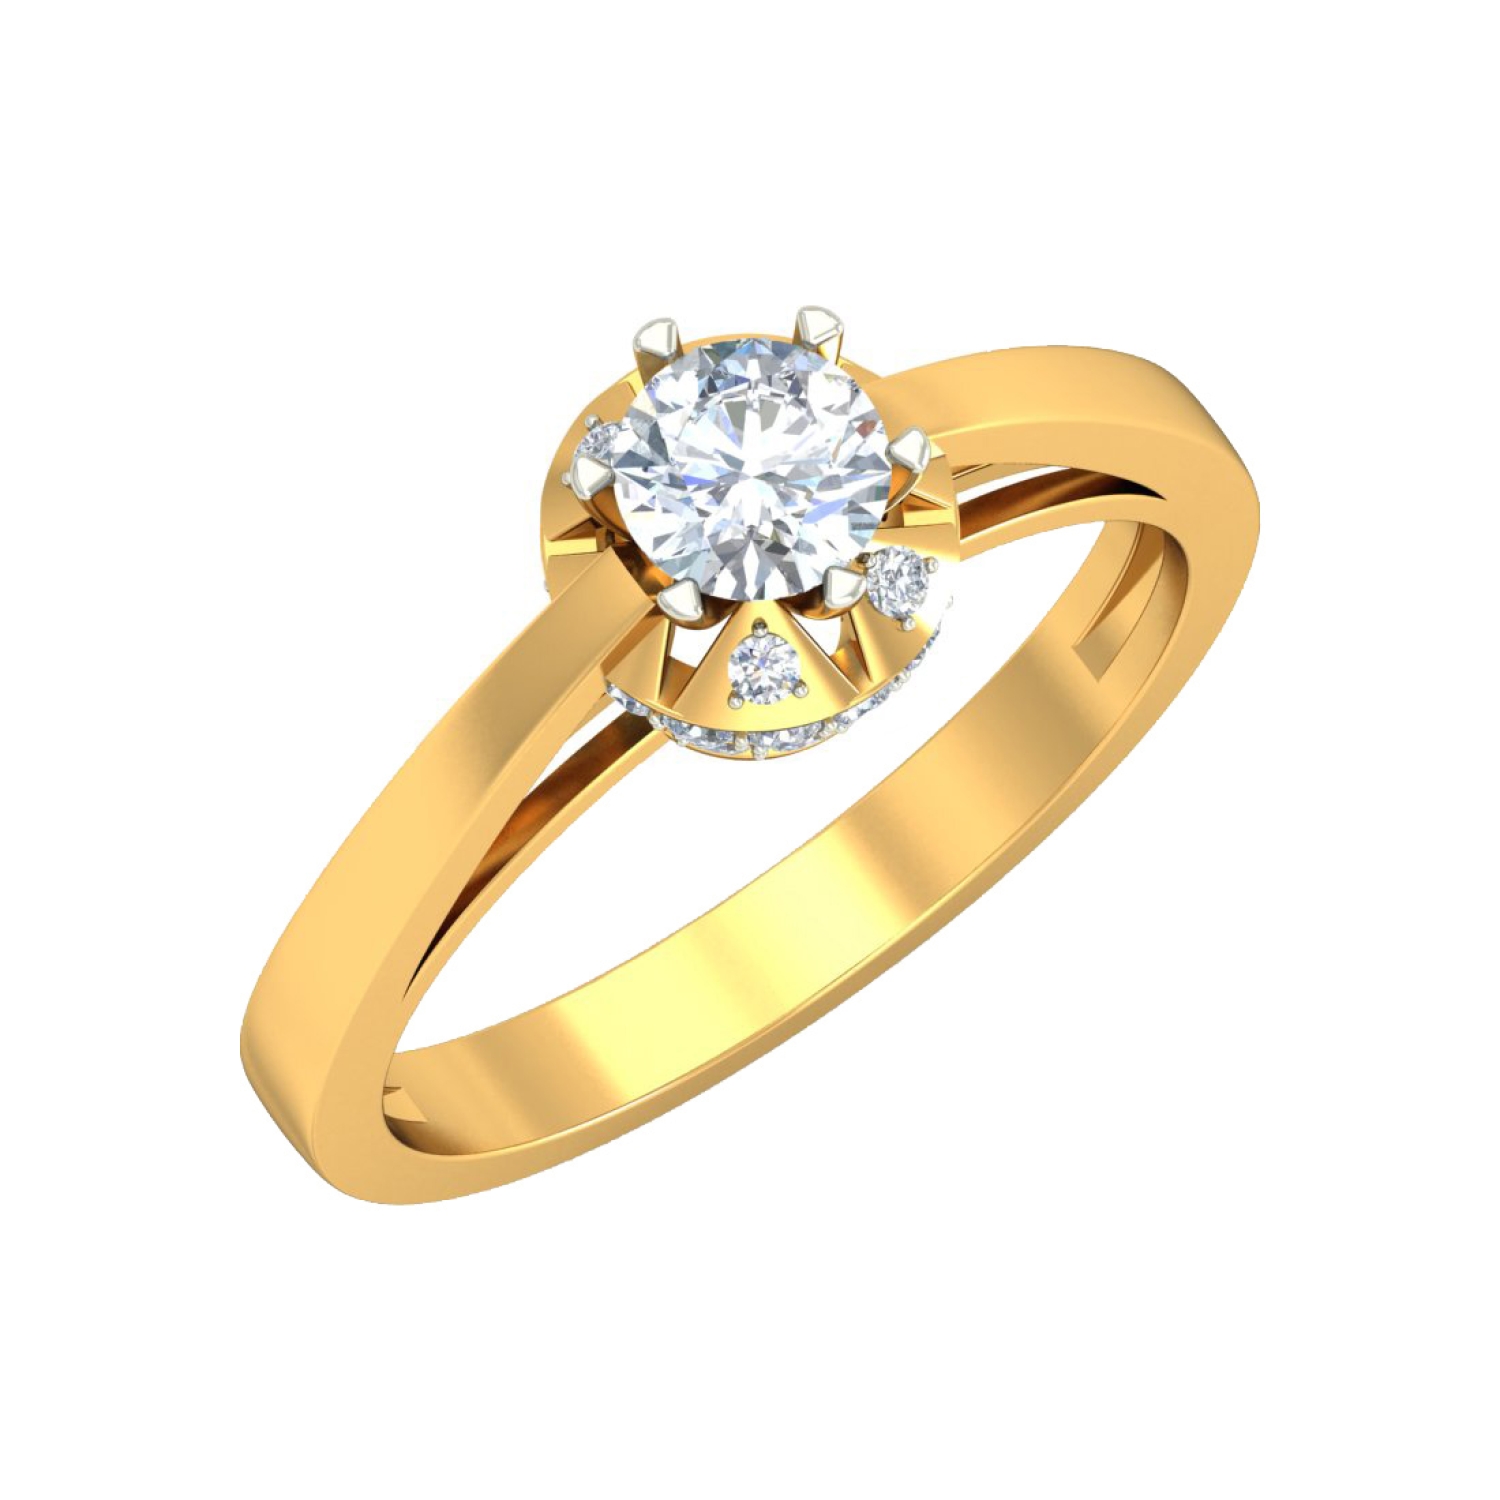 Buy Seven Stone Diamond Rings Online in India - Ayaani Diamonds